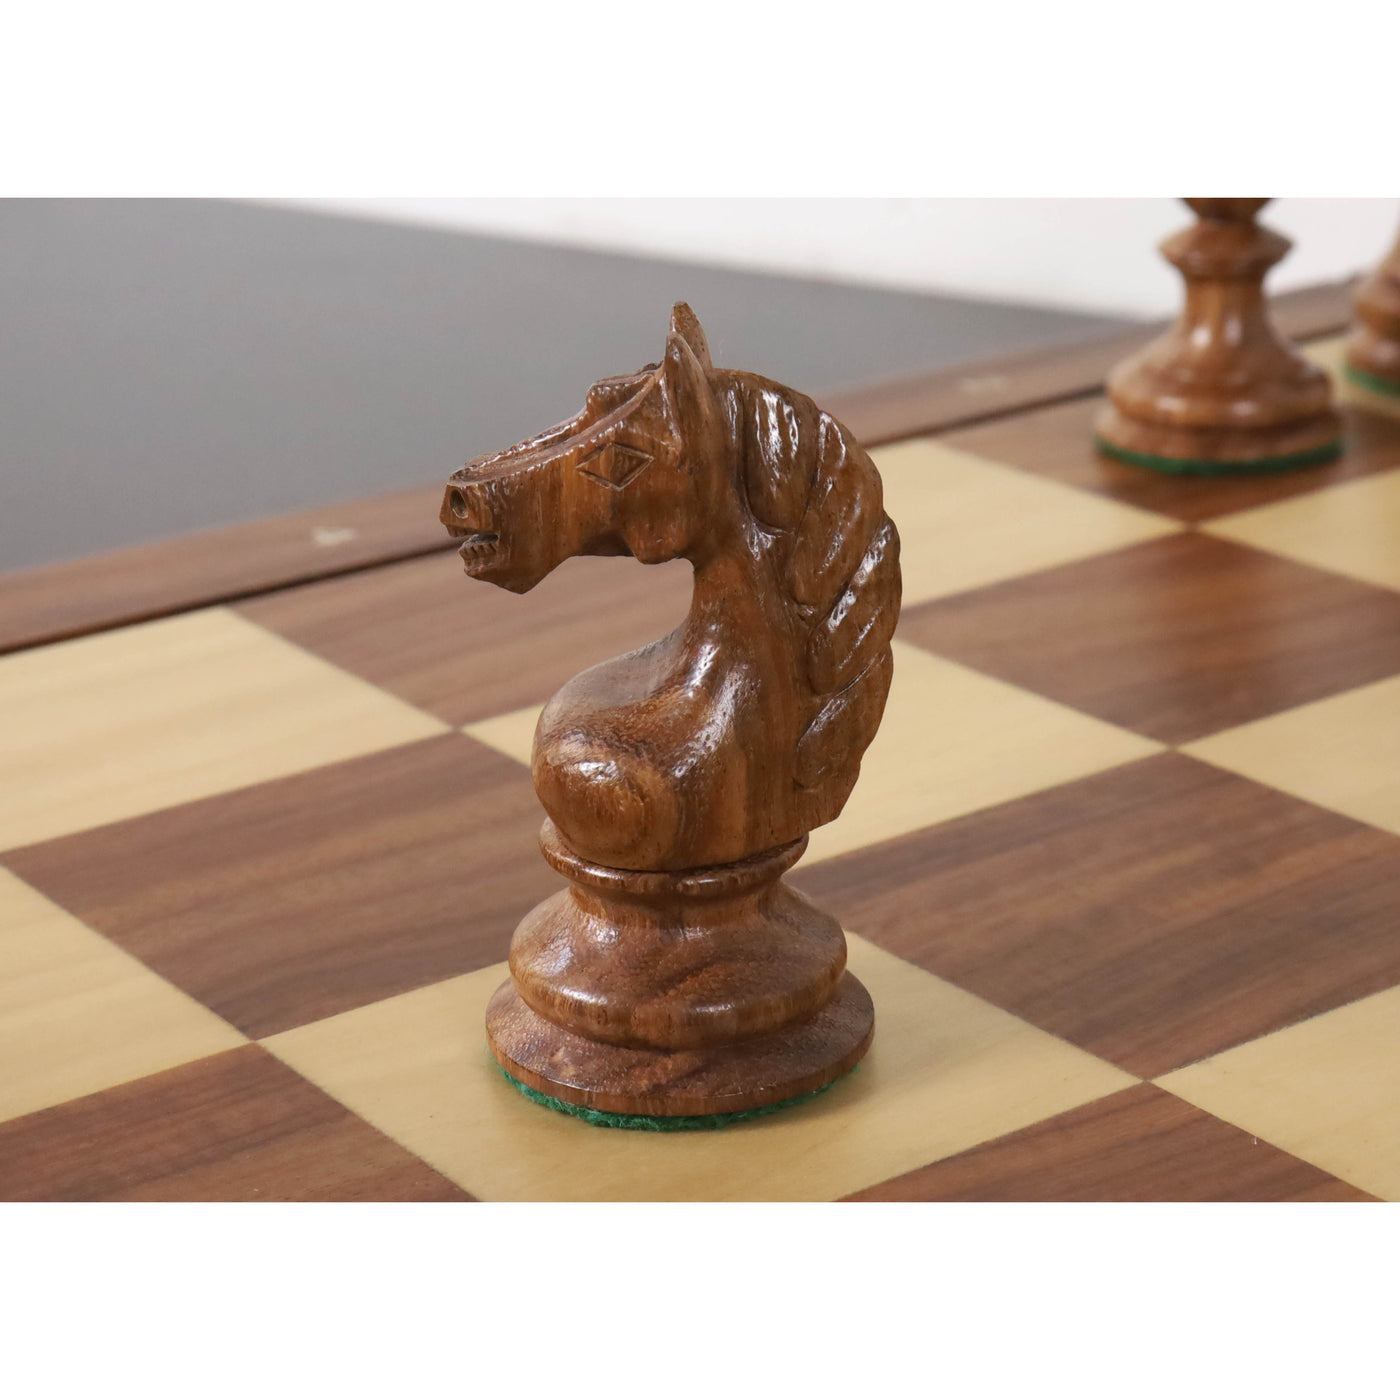 1933 Botvinnik Flohr-I Soviet Chess Pieces Only Set -Golden Rosewood- 3.6" King